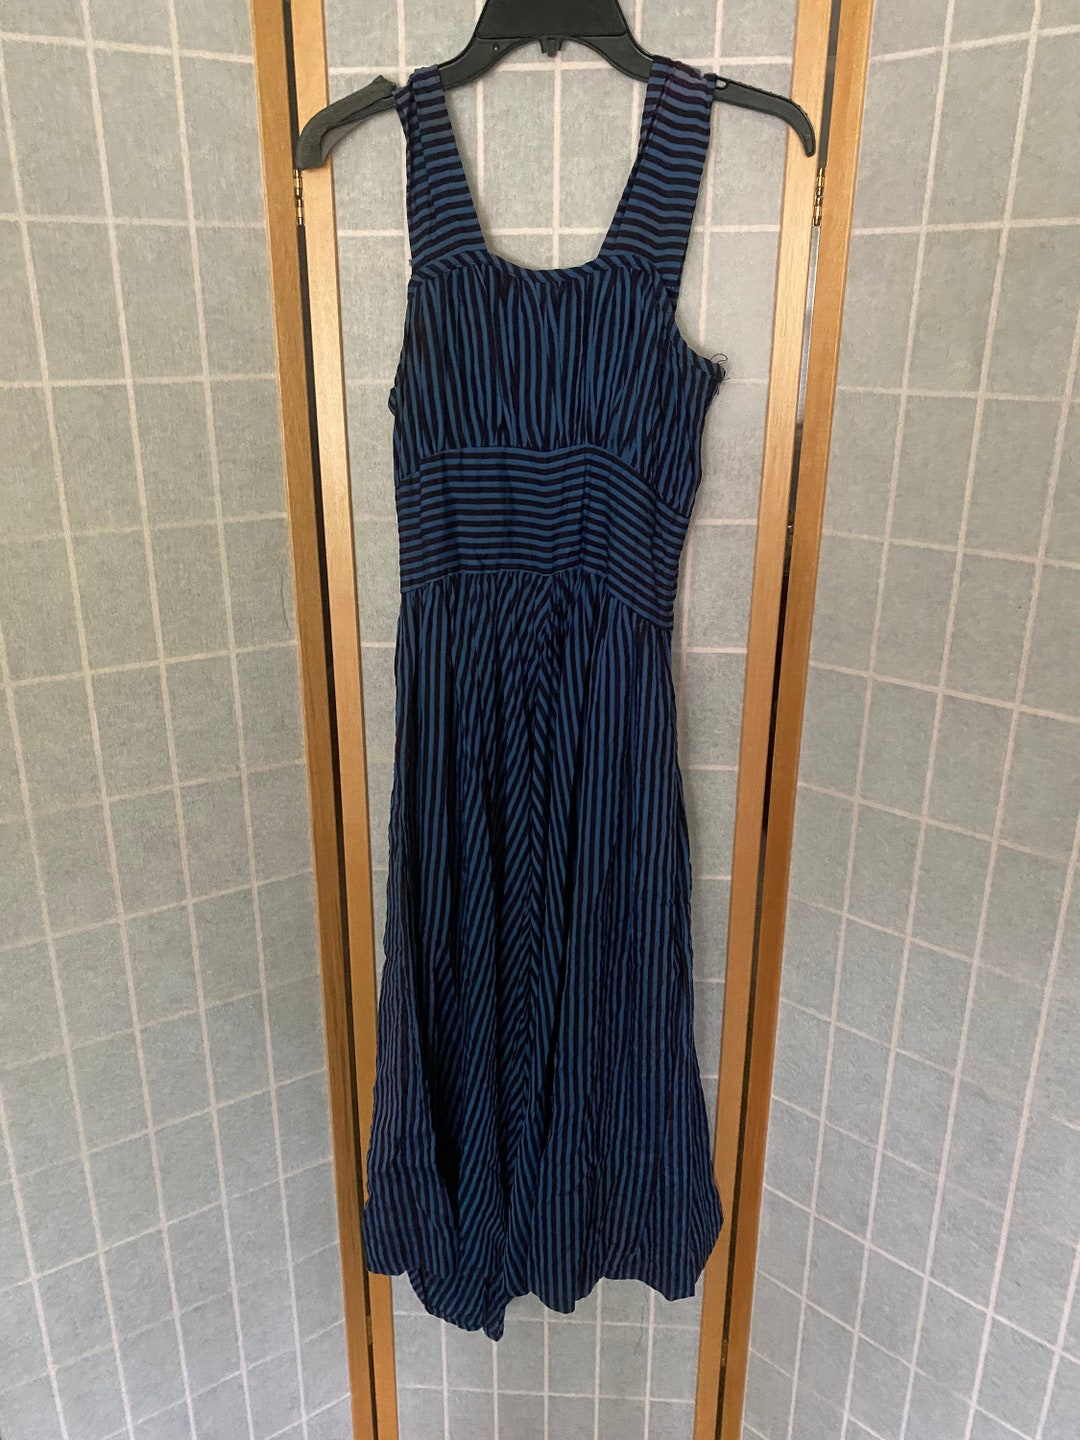 Vintage 1950's Black and Blue Striped Sun Dress Size XS - Etsy